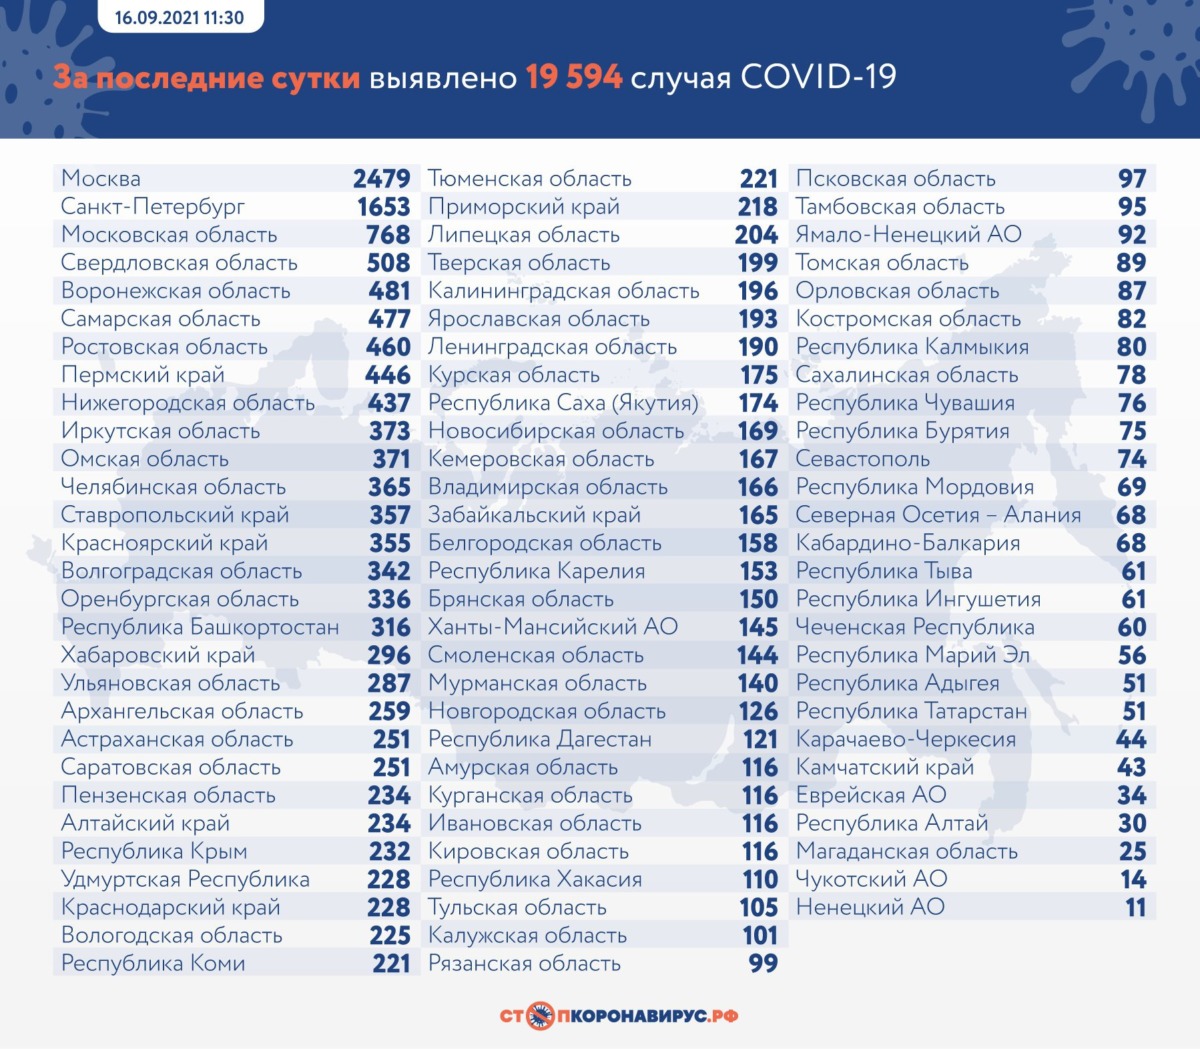 Оперативная статистика по коронавирусу в России на 16 сентября